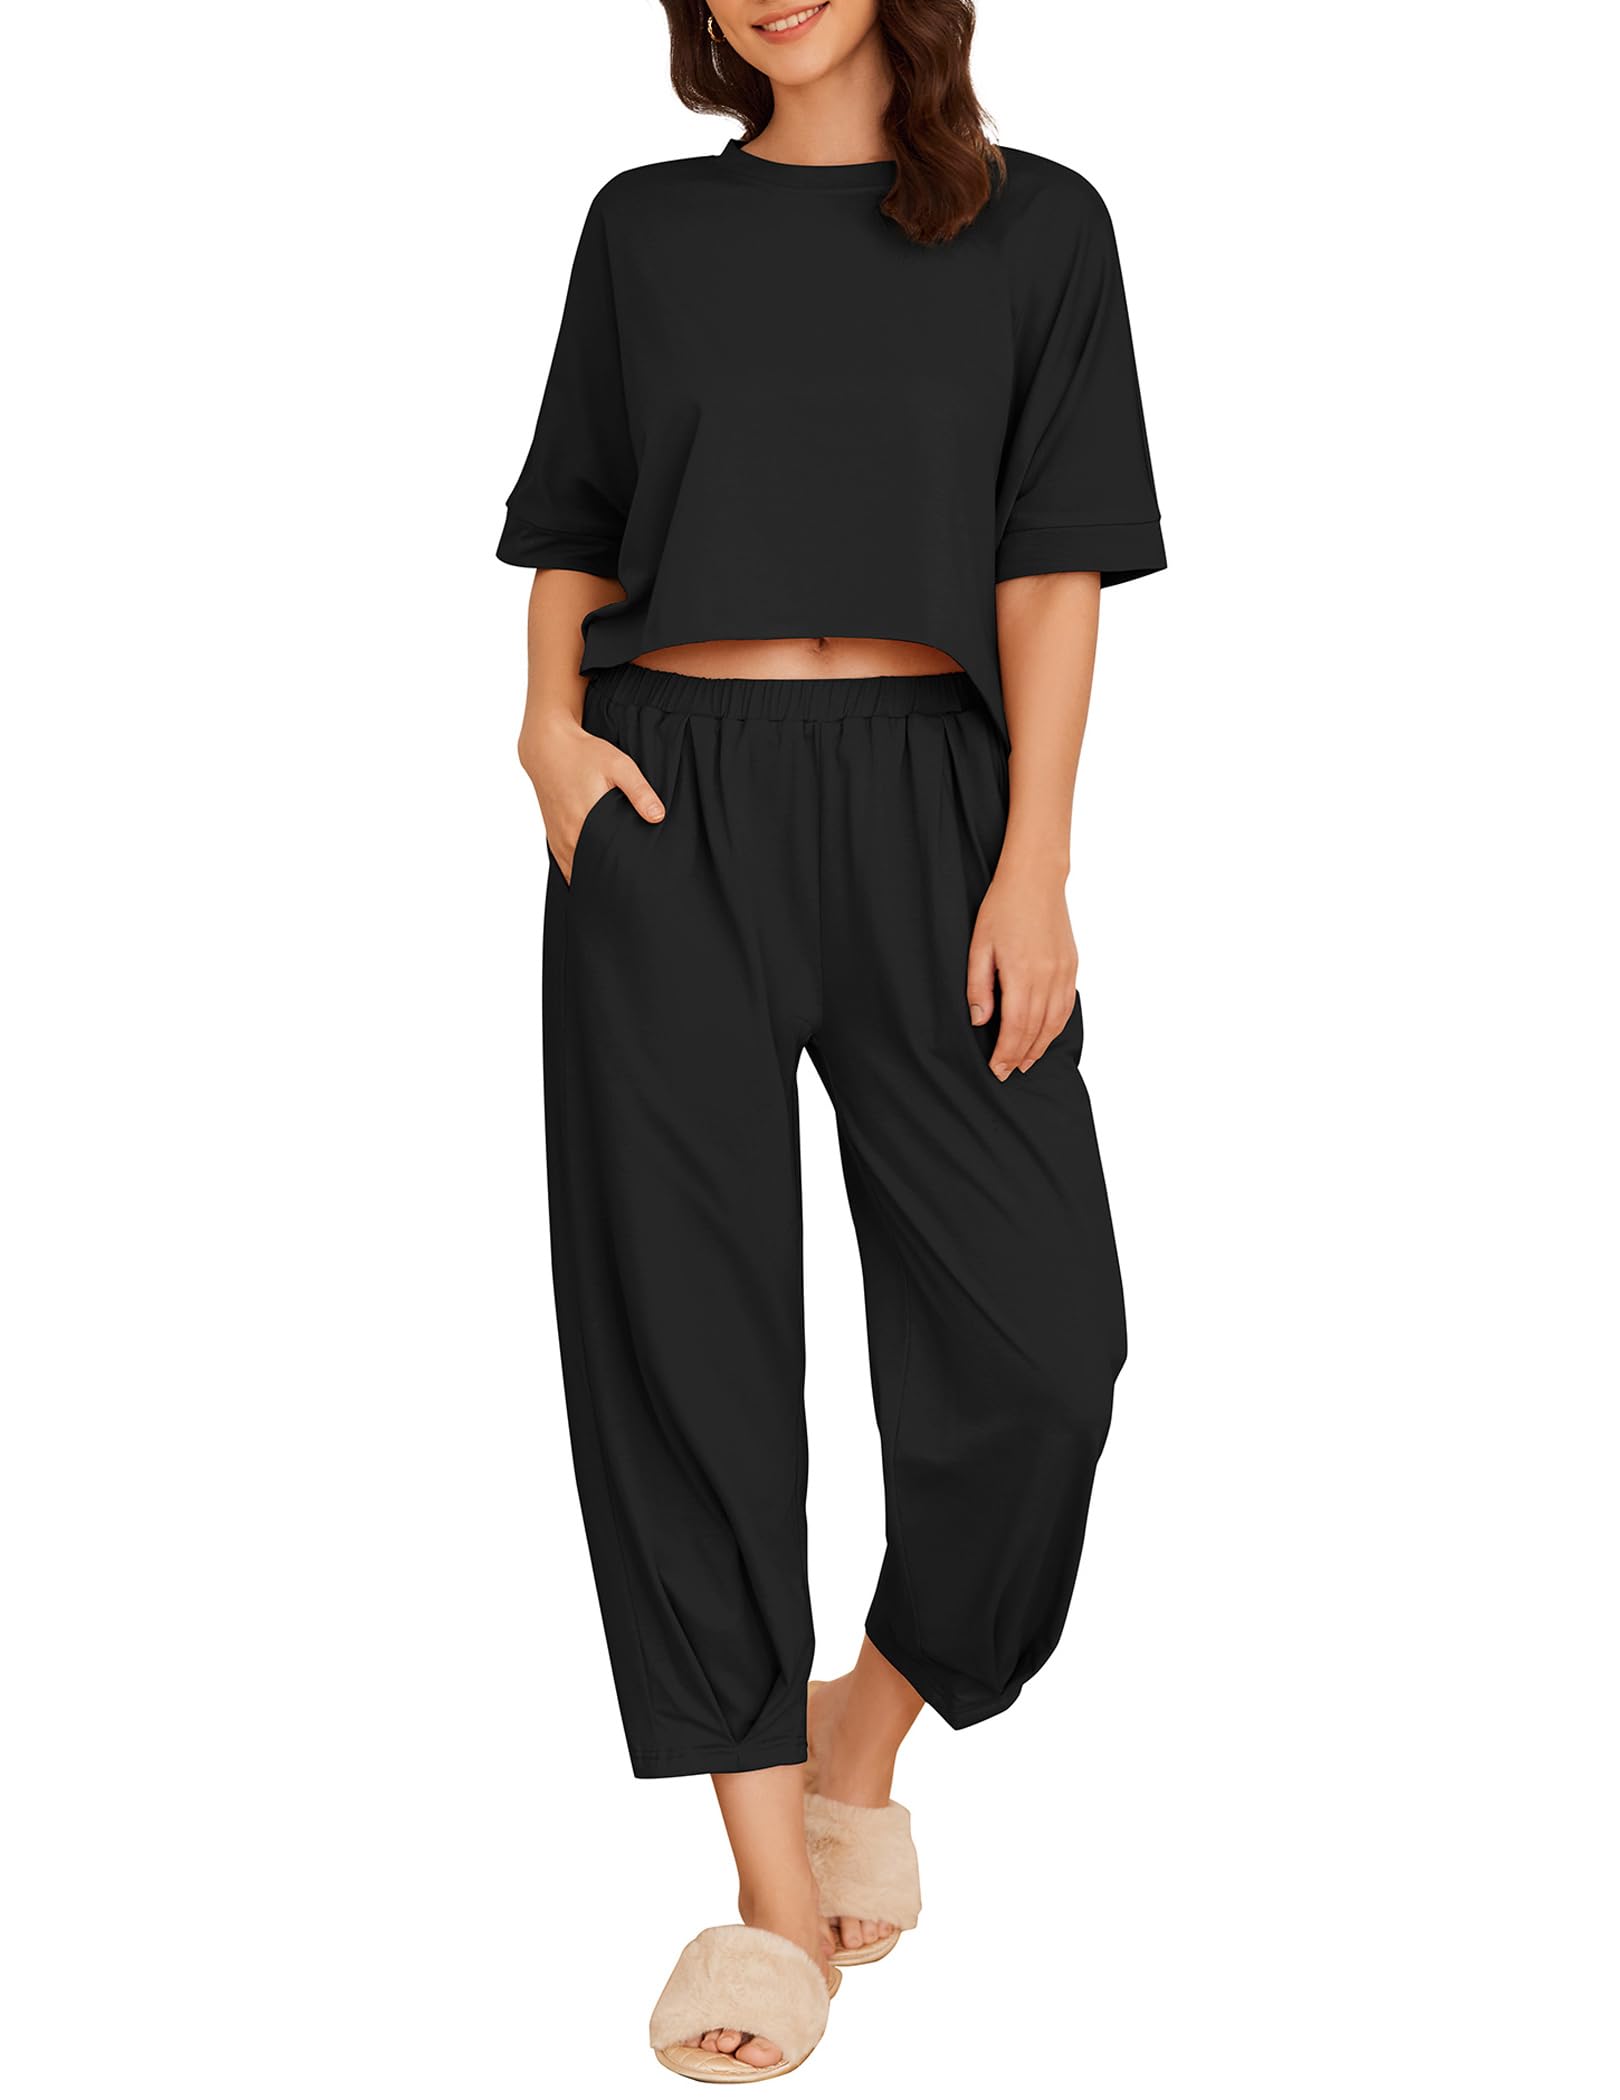 Women's Short Sleeve 2 Piece Loose Loungewear (Buy 2 Free Shipping)